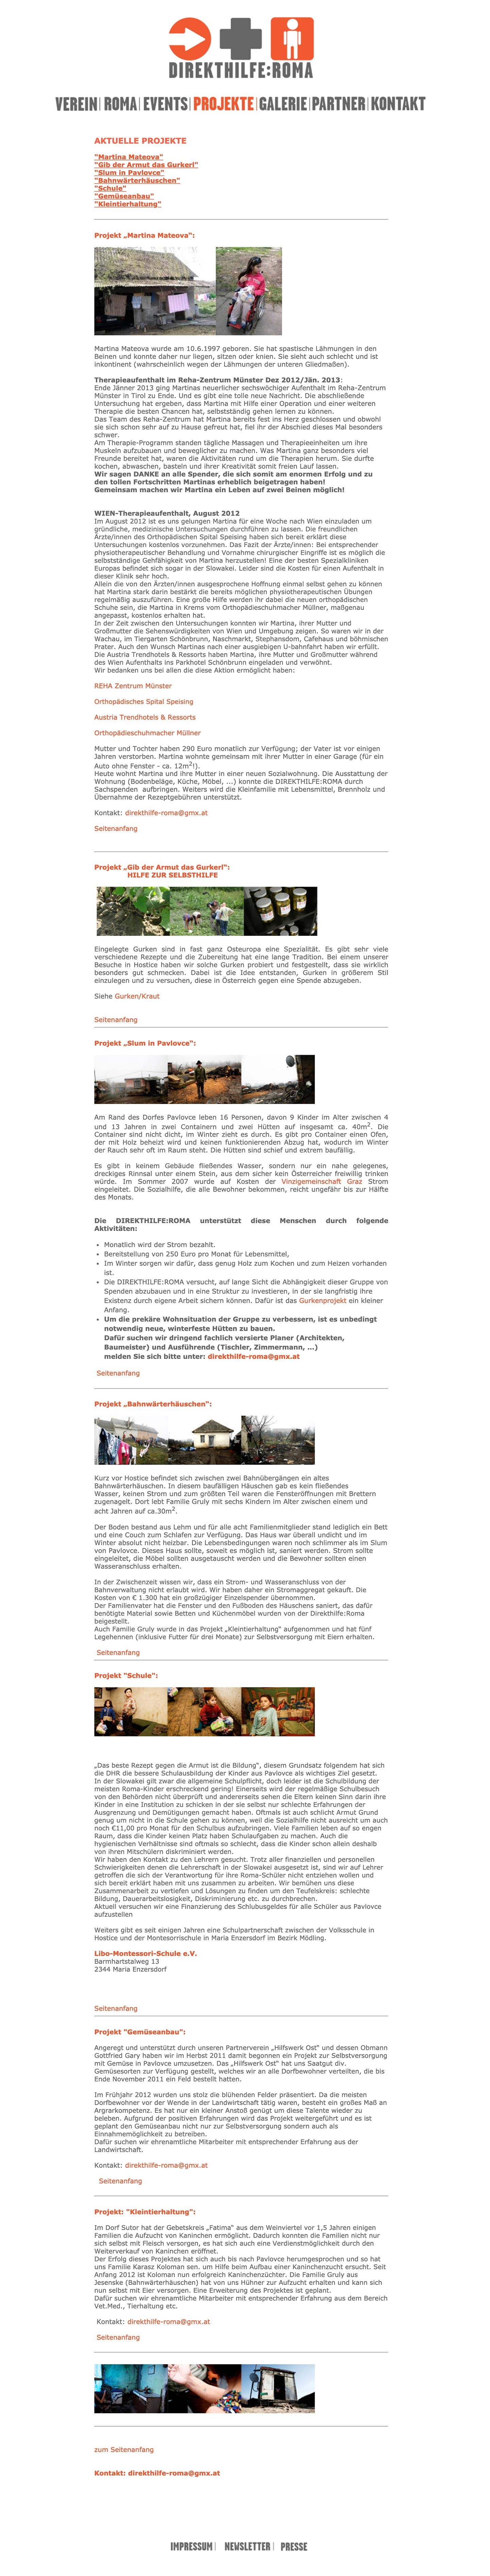 Direkthilfe Roma | direkthilferoma.at | 2008 (Full Screen Scroll) © echonet communication